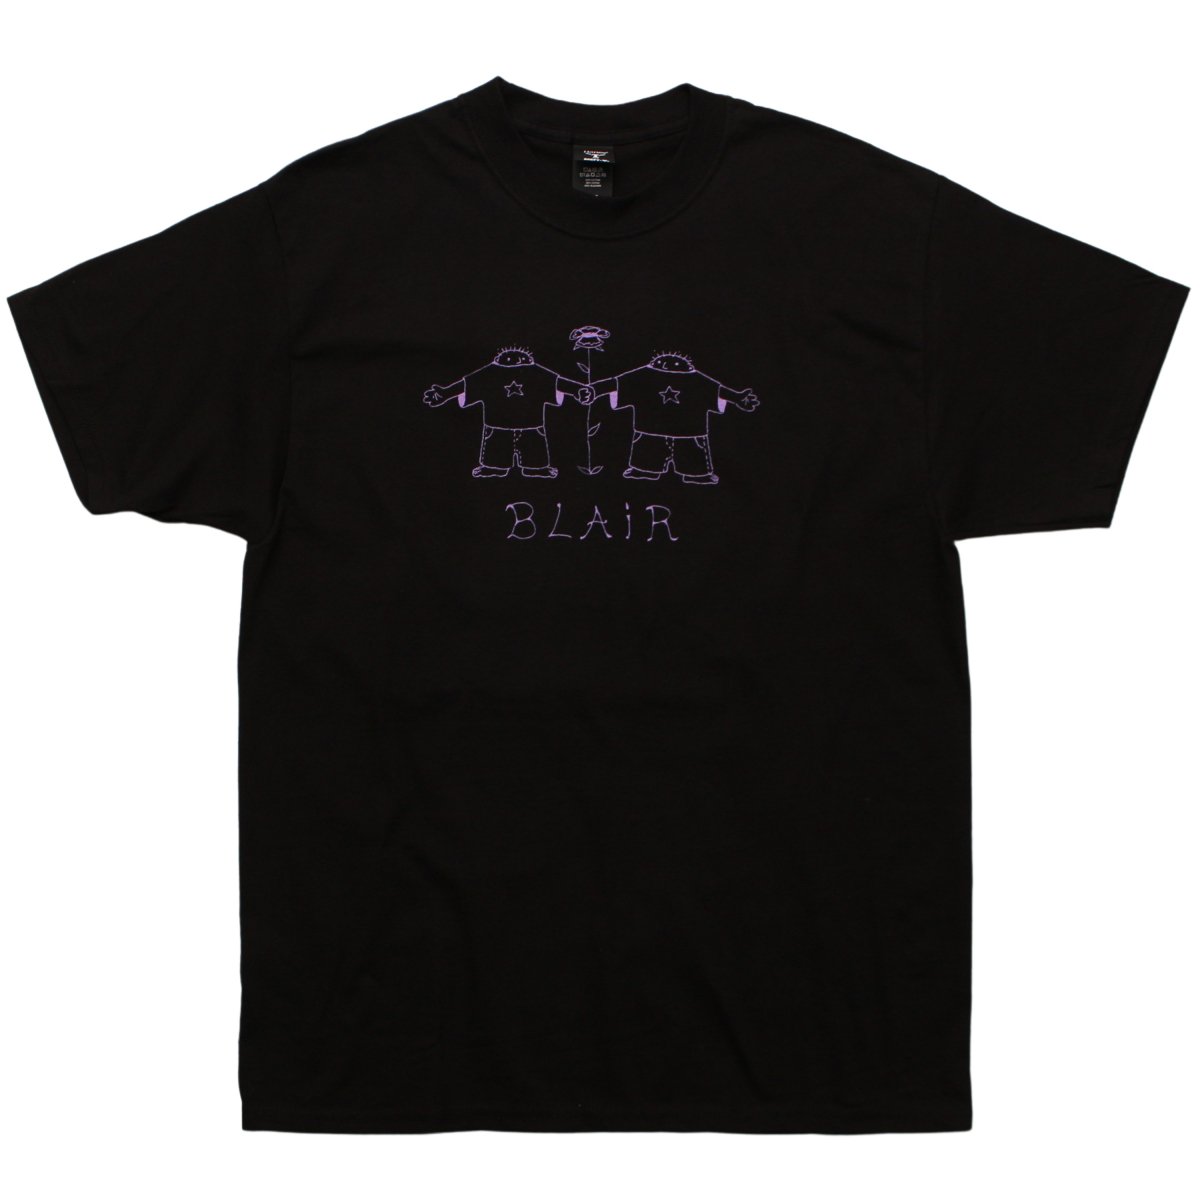 Blair graphic s/s tee【BLACK】